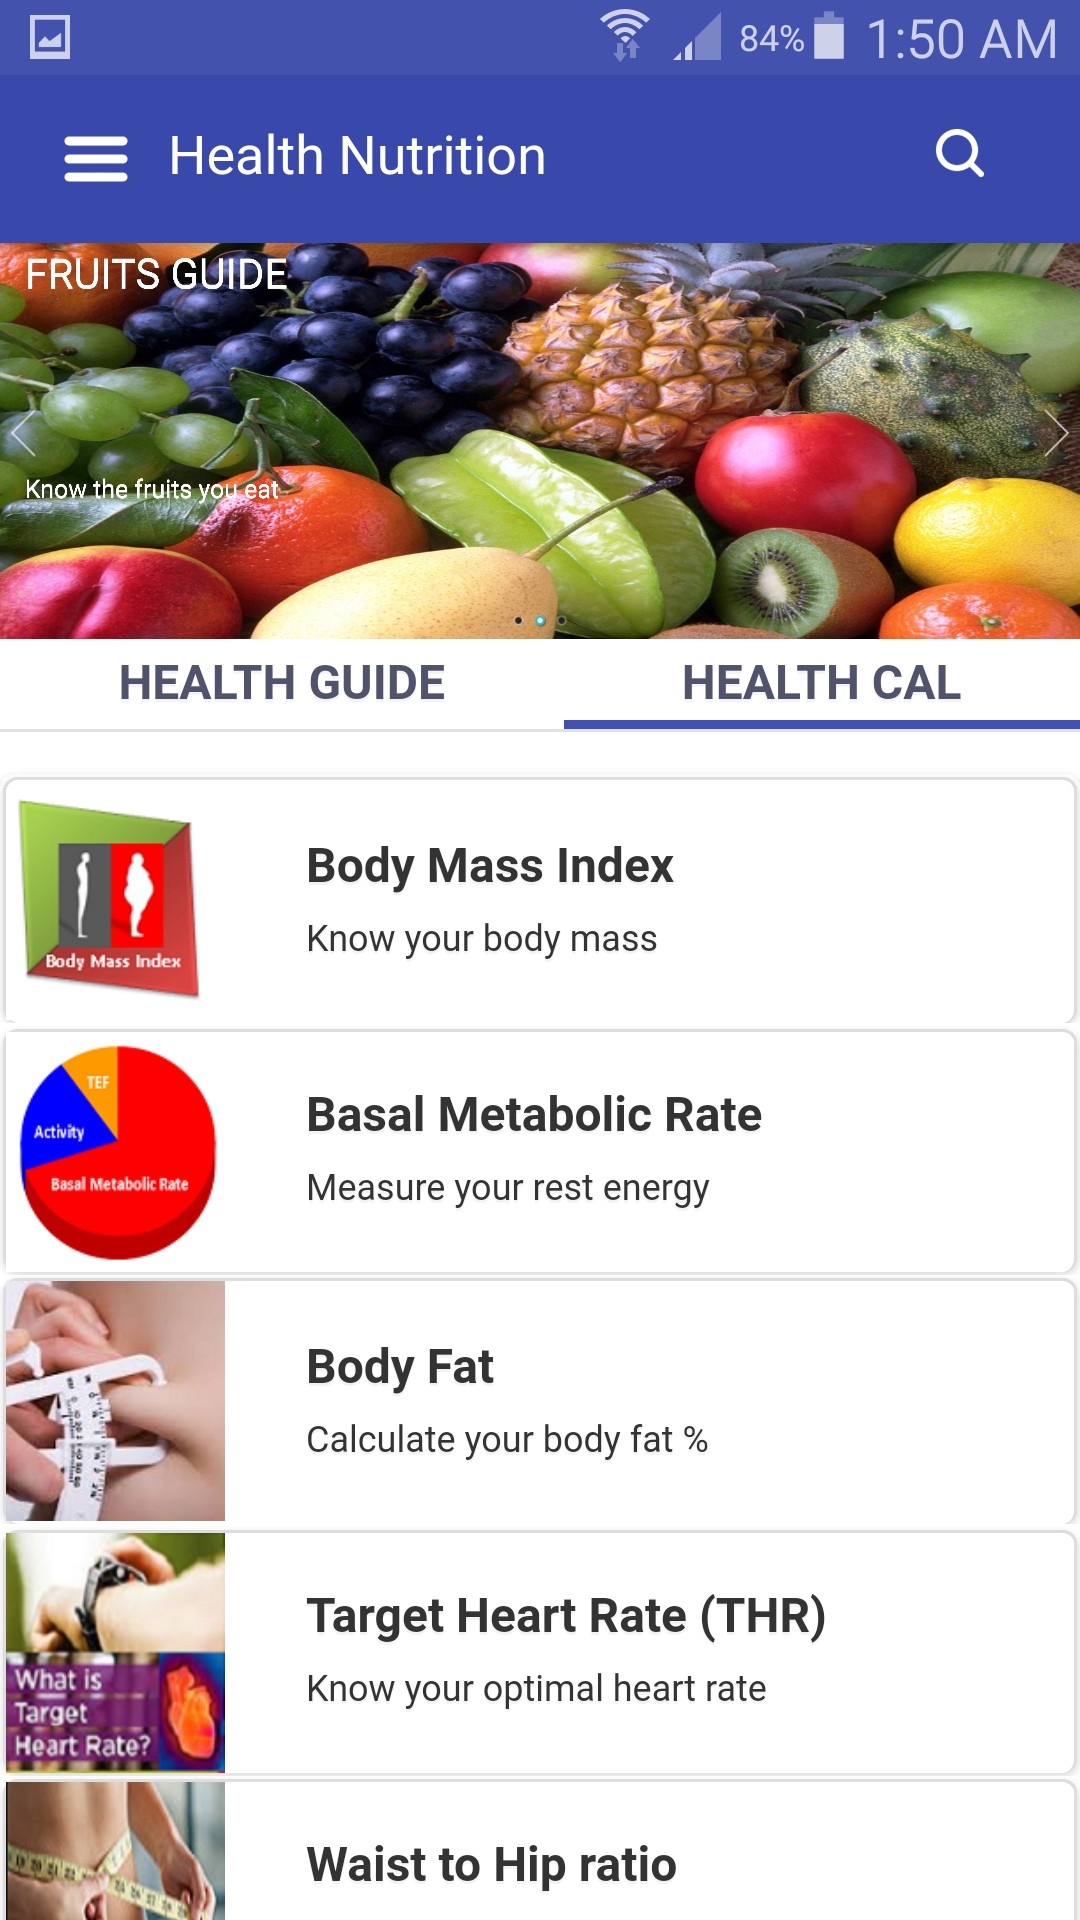 Health Nutrition App